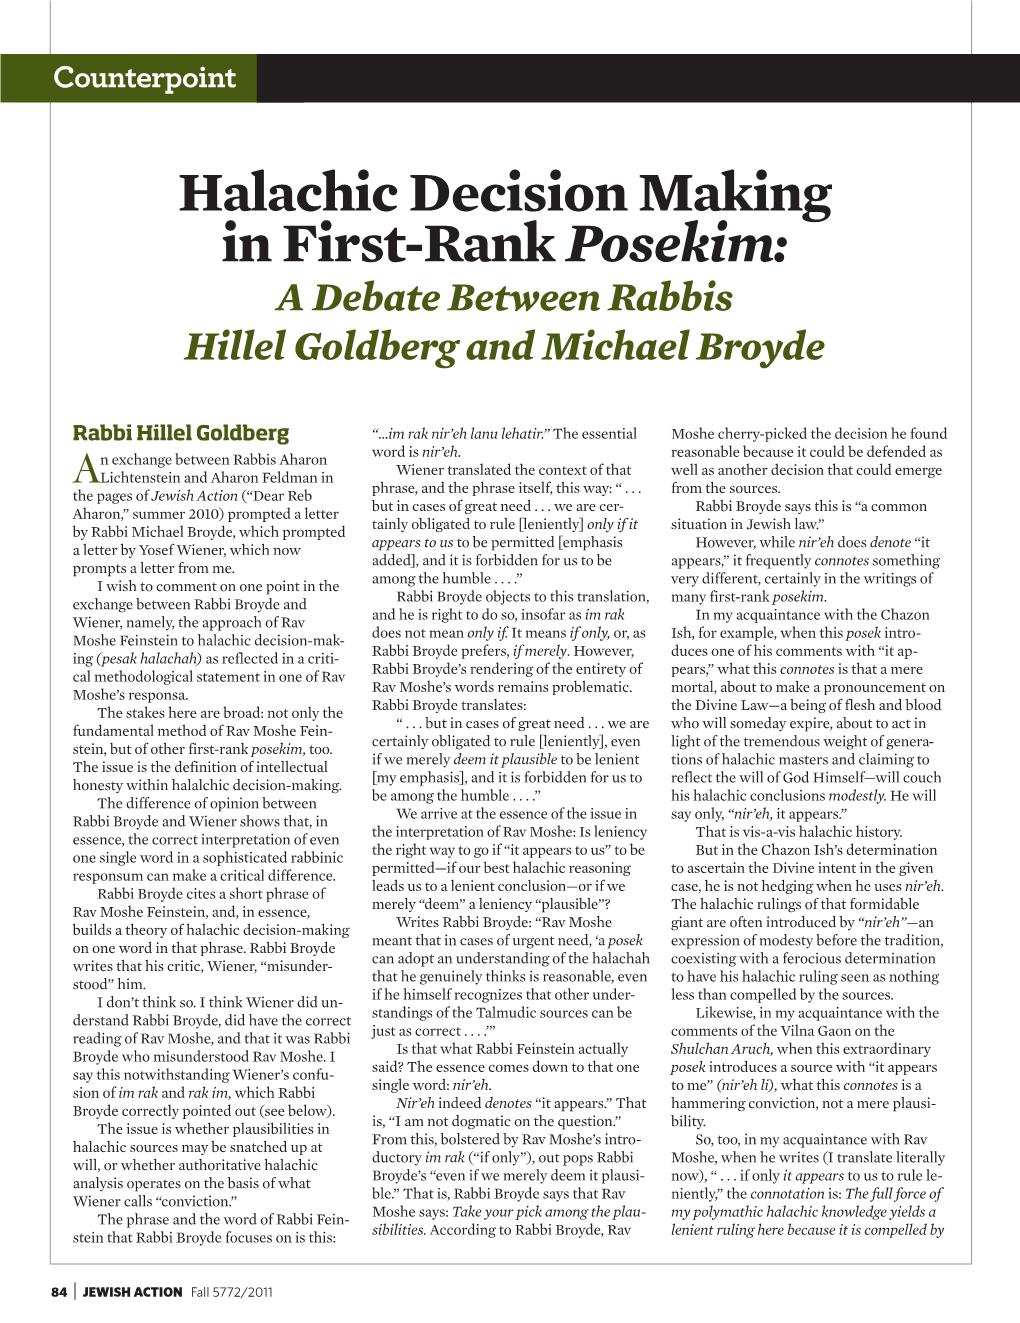 Halachic Decision Making in First-Rank Posekim: a Debate Between Rabbis Hillel Goldberg and Michael Broyde